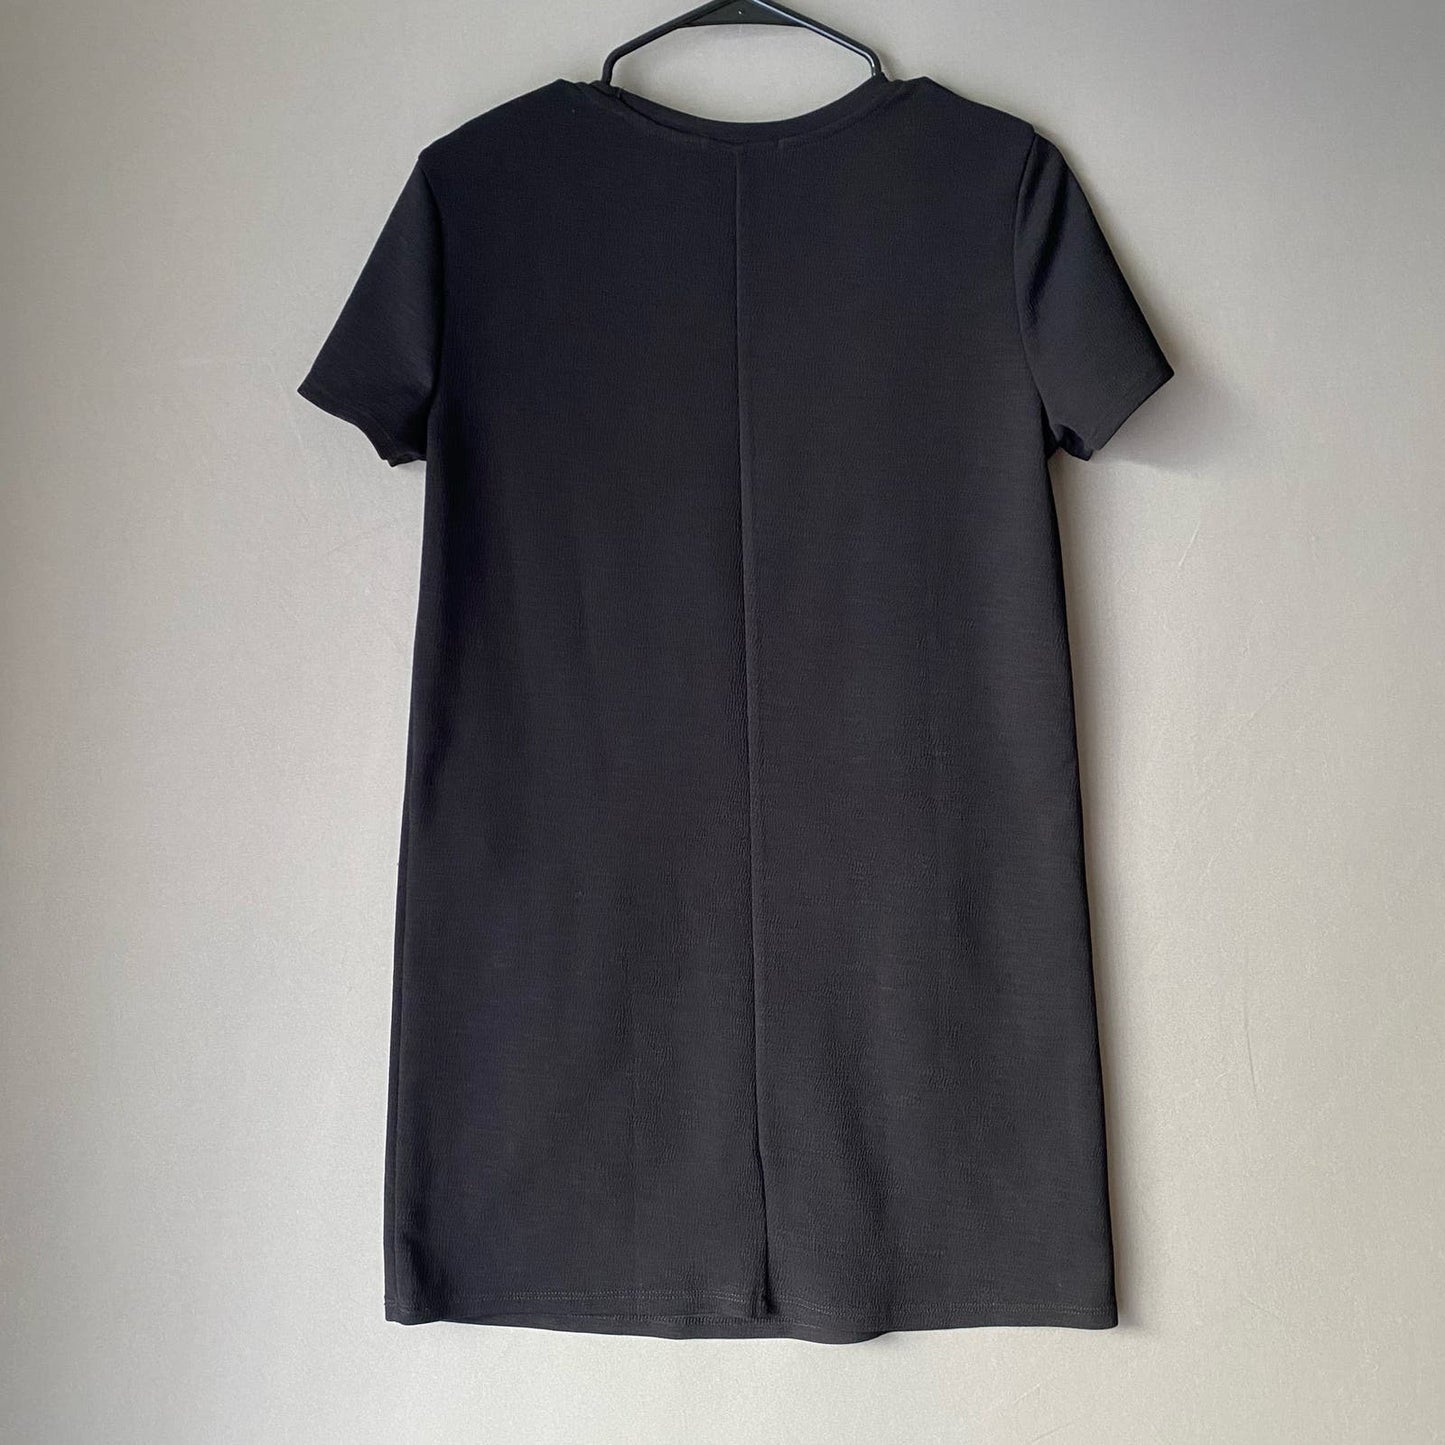 Zara sz S shift black mod 60's inspired mini dress